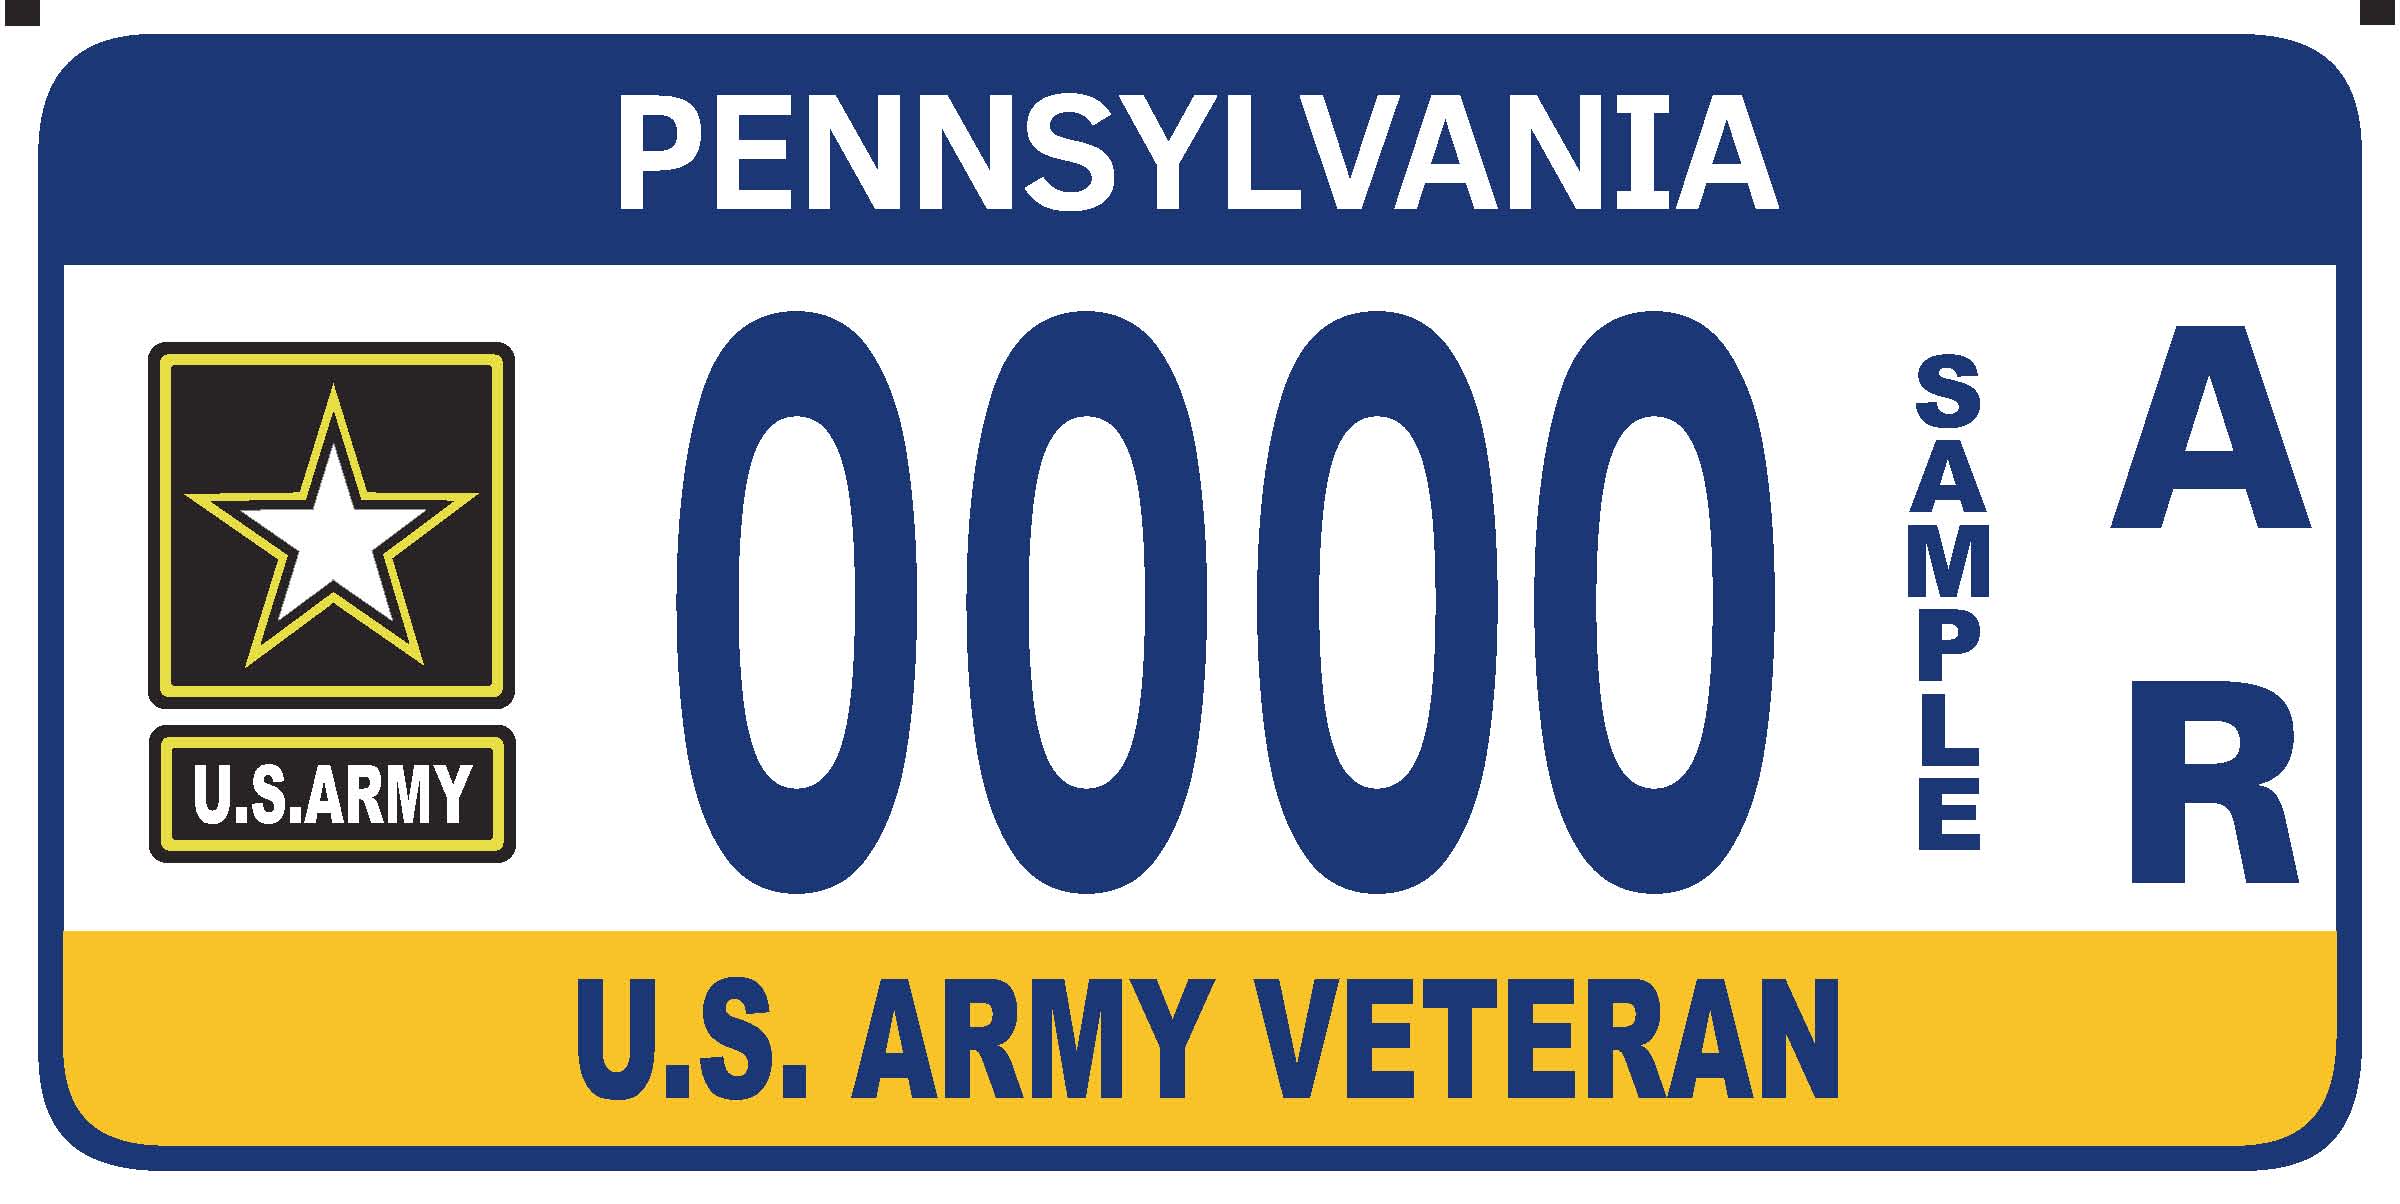 U.S. Army Veteran plate